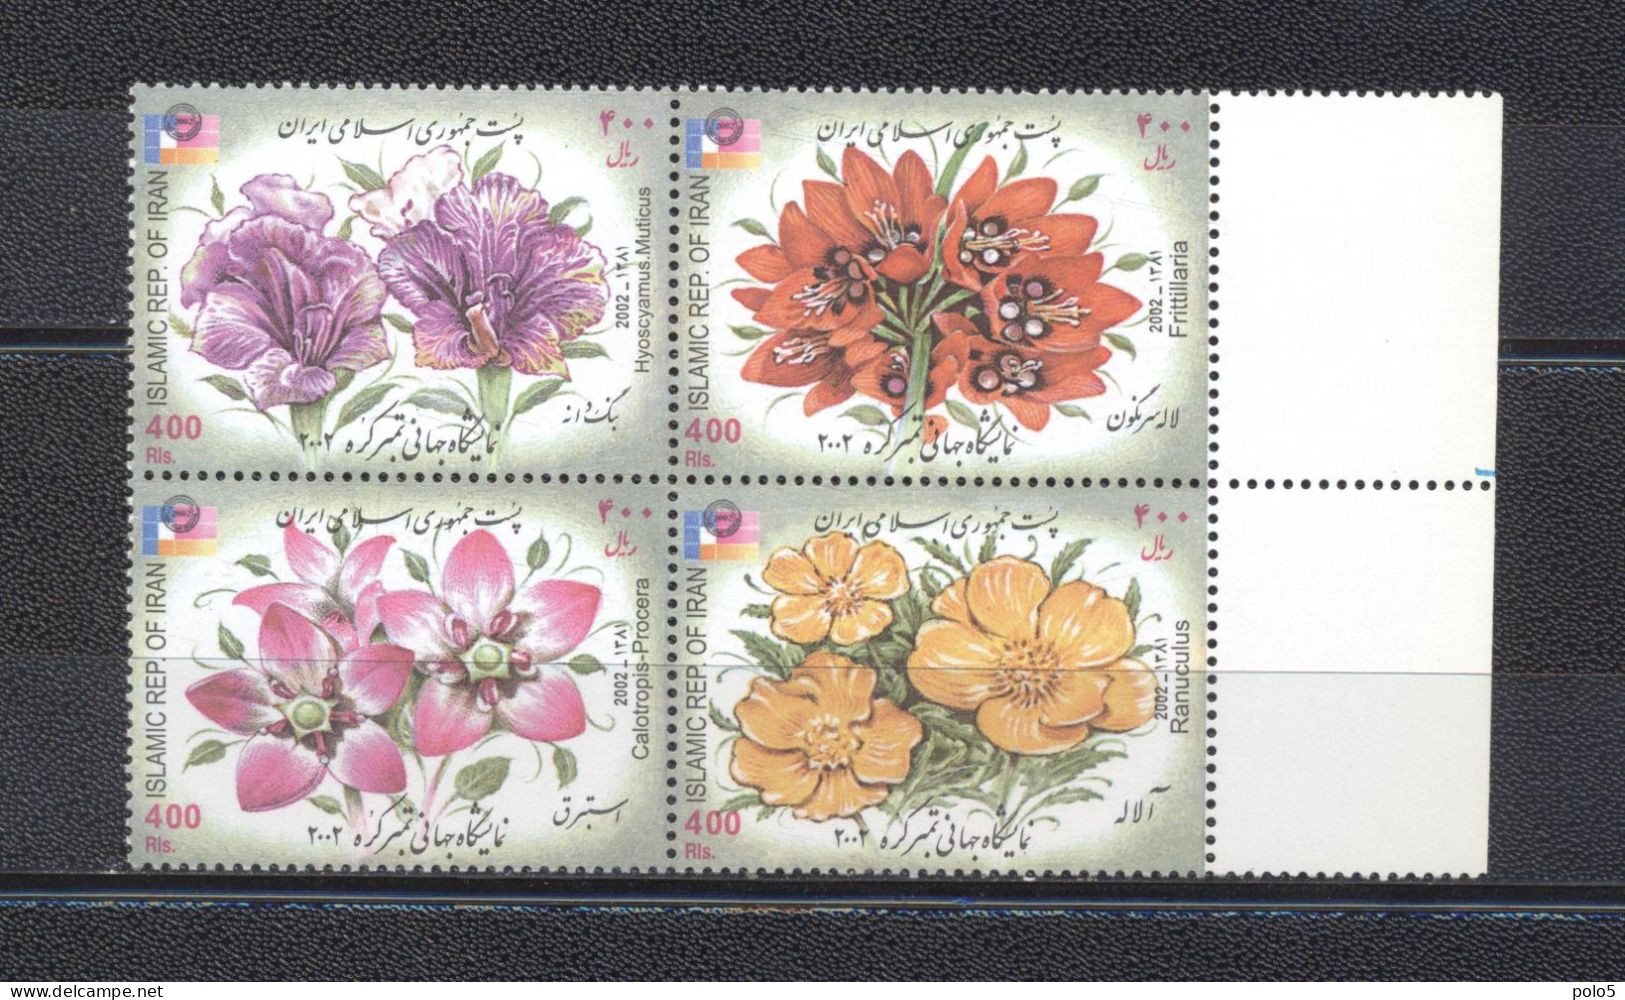 Iran 2002- Flowers- International Stamp Exhibition Philakorea , Seoul-South Korea Block Of 4 V - Irán